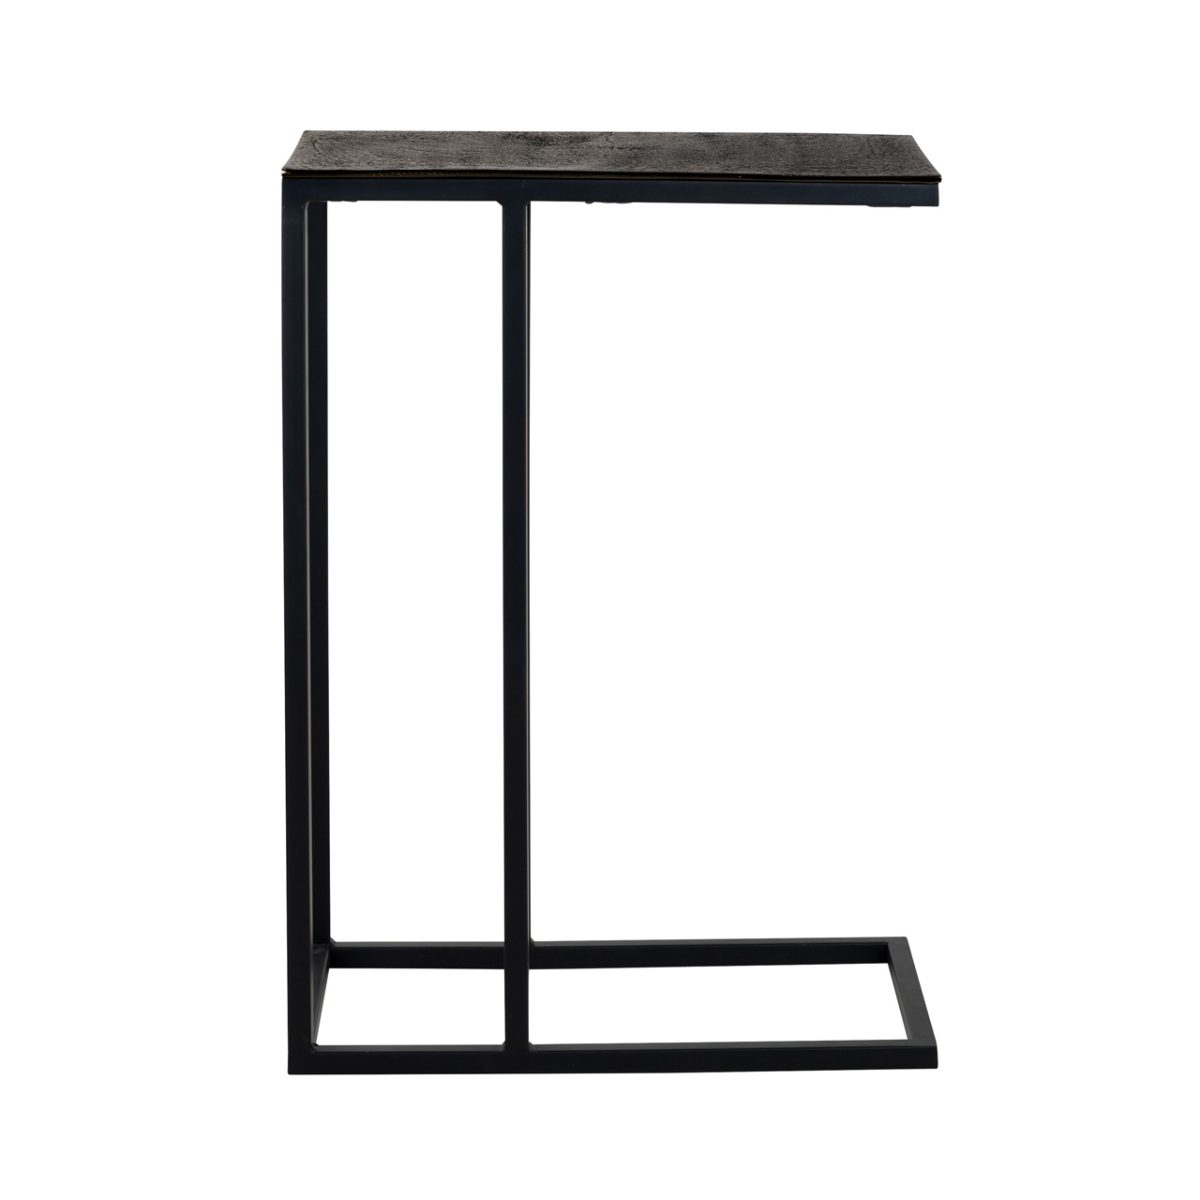 825074 - Sofa tafel Bolder aluminium zwart (Black)